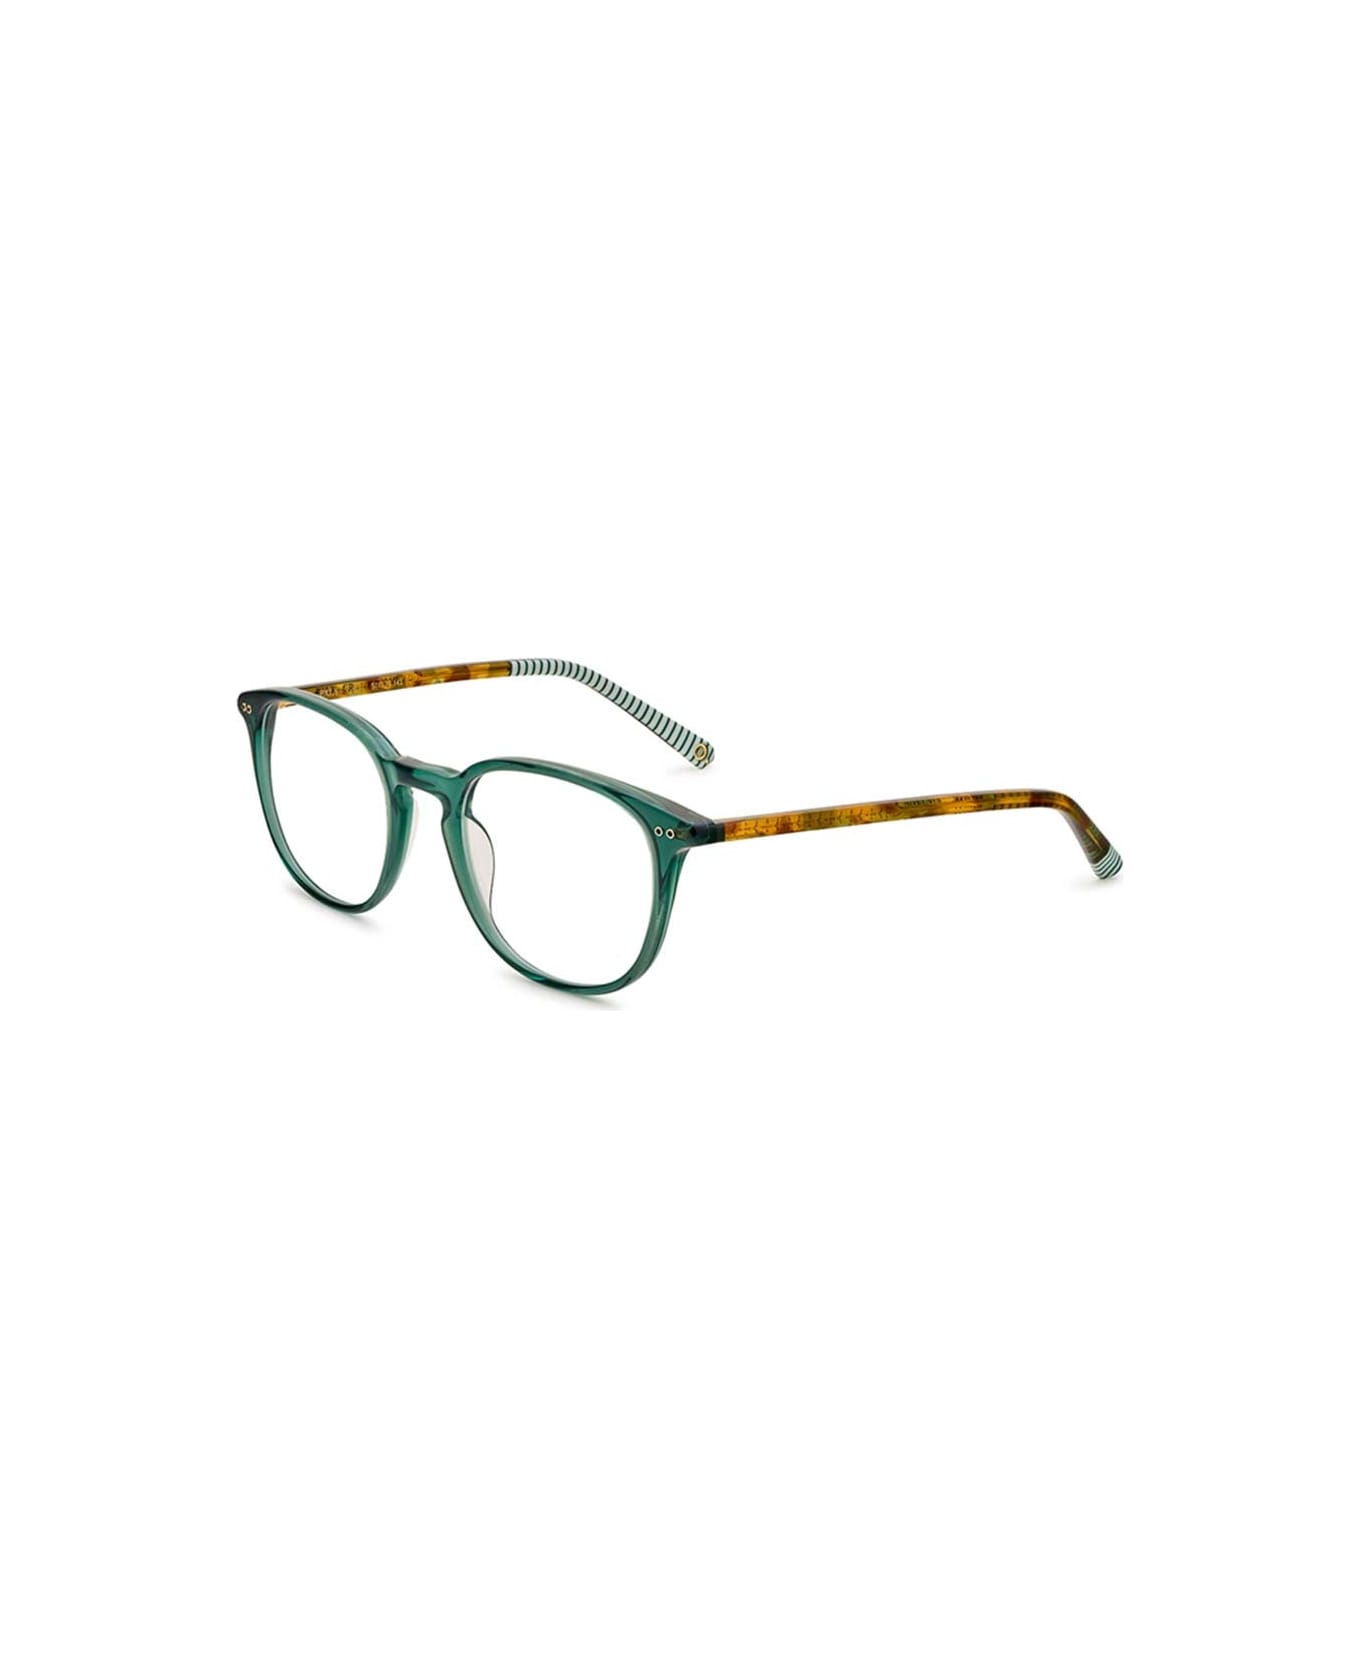 Etnia Barcelona Glasses - Verde